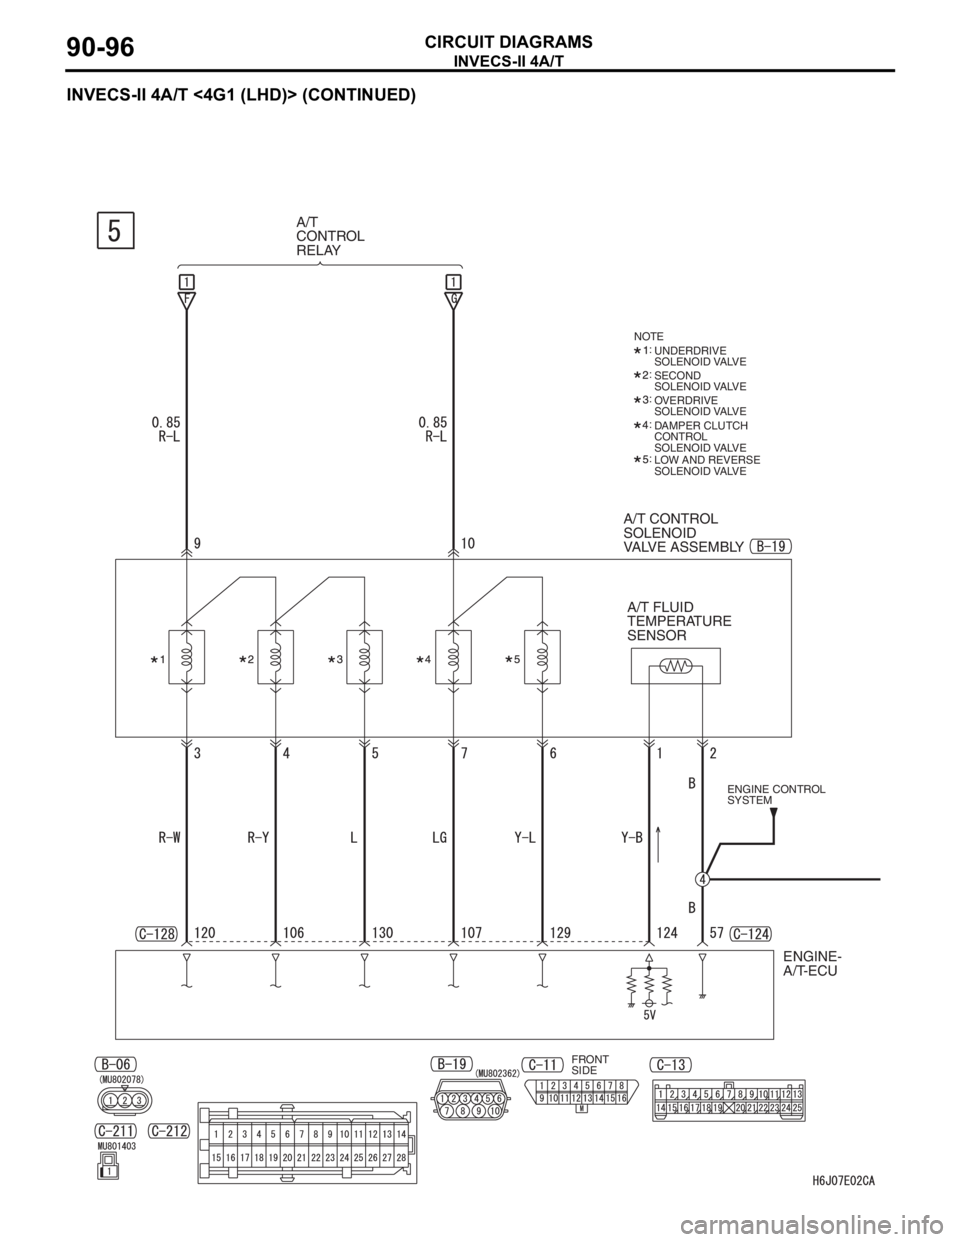 MITSUBISHI LANCER 2006  Workshop Manual INVECS-II 4A/T
CIRCUIT DIAGRAMS90-96
INVECS-II 4A/T <4G1 (LHD)> (CONTINUED)
A/T 
CONTROL 
RELAY
A/T CONTROL 
SOLENOID 
VALVE ASSEMBLY
ENGINE CONTROL 
SYSTEM
ENGINE-
A/T-ECU
NOTE
: 
: 
: 
: 
: UNDERDRI